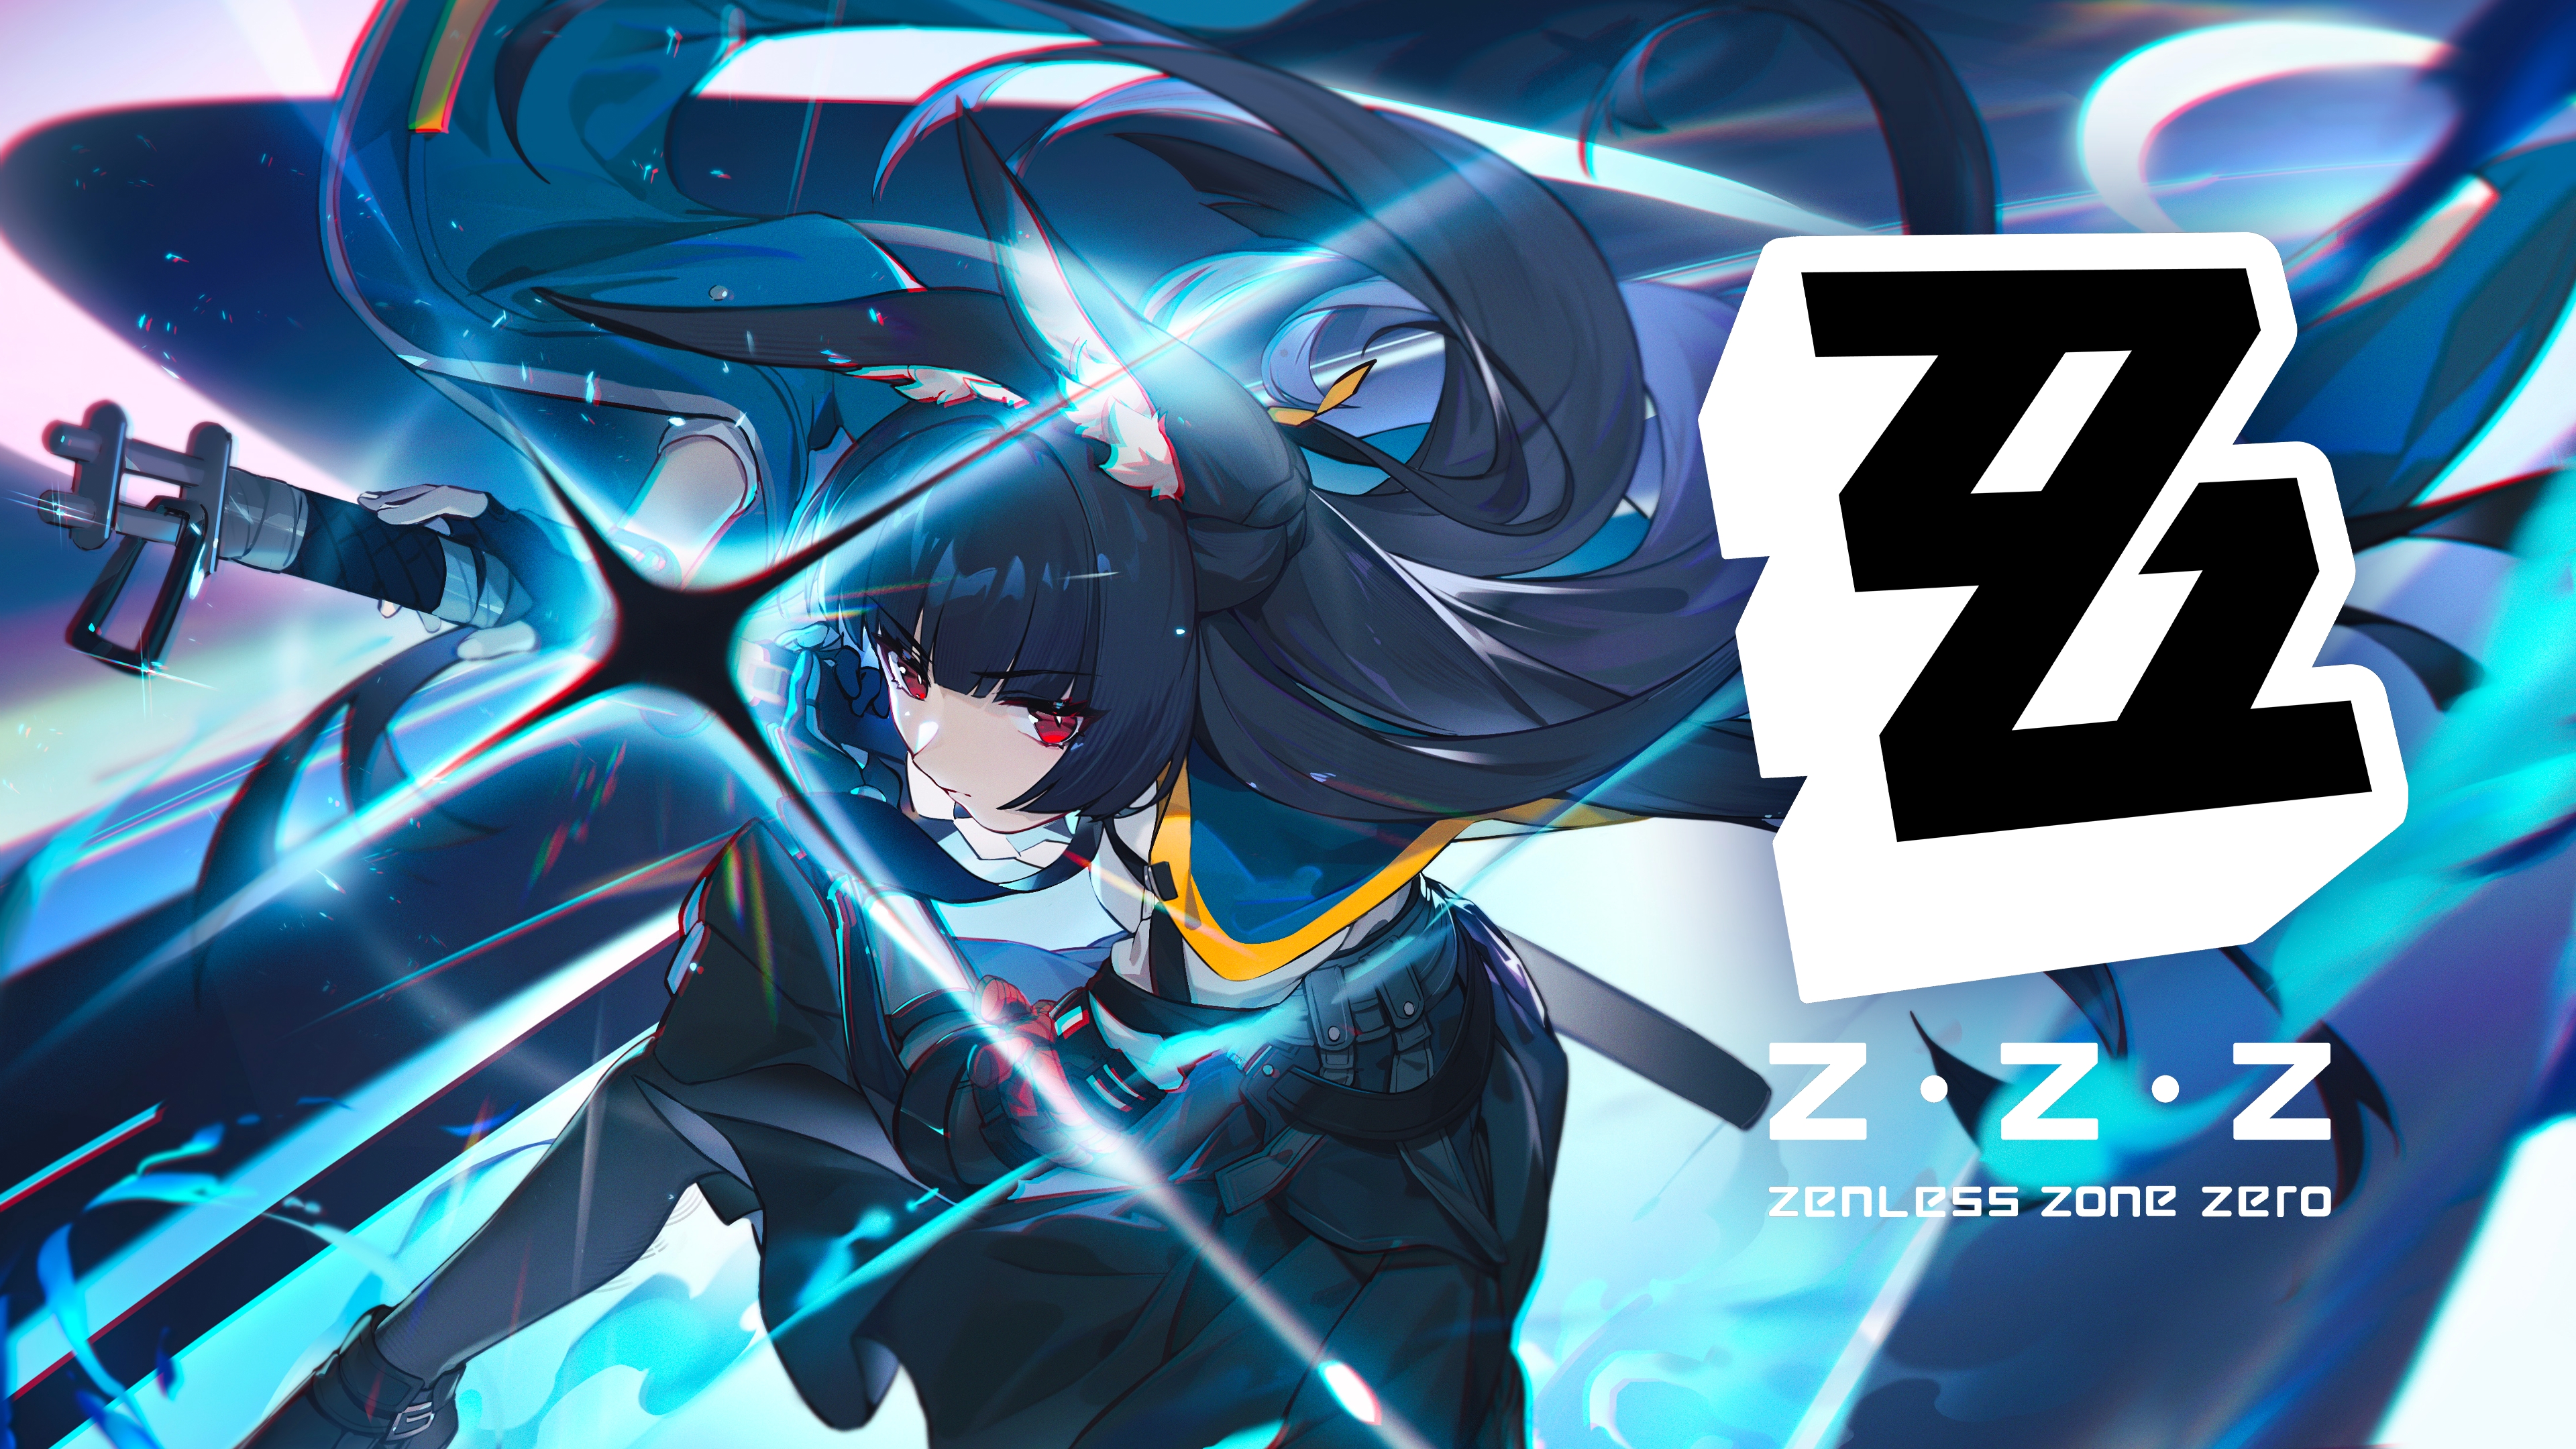 Does Zenless Zone Zero have multiplayer / co-op?